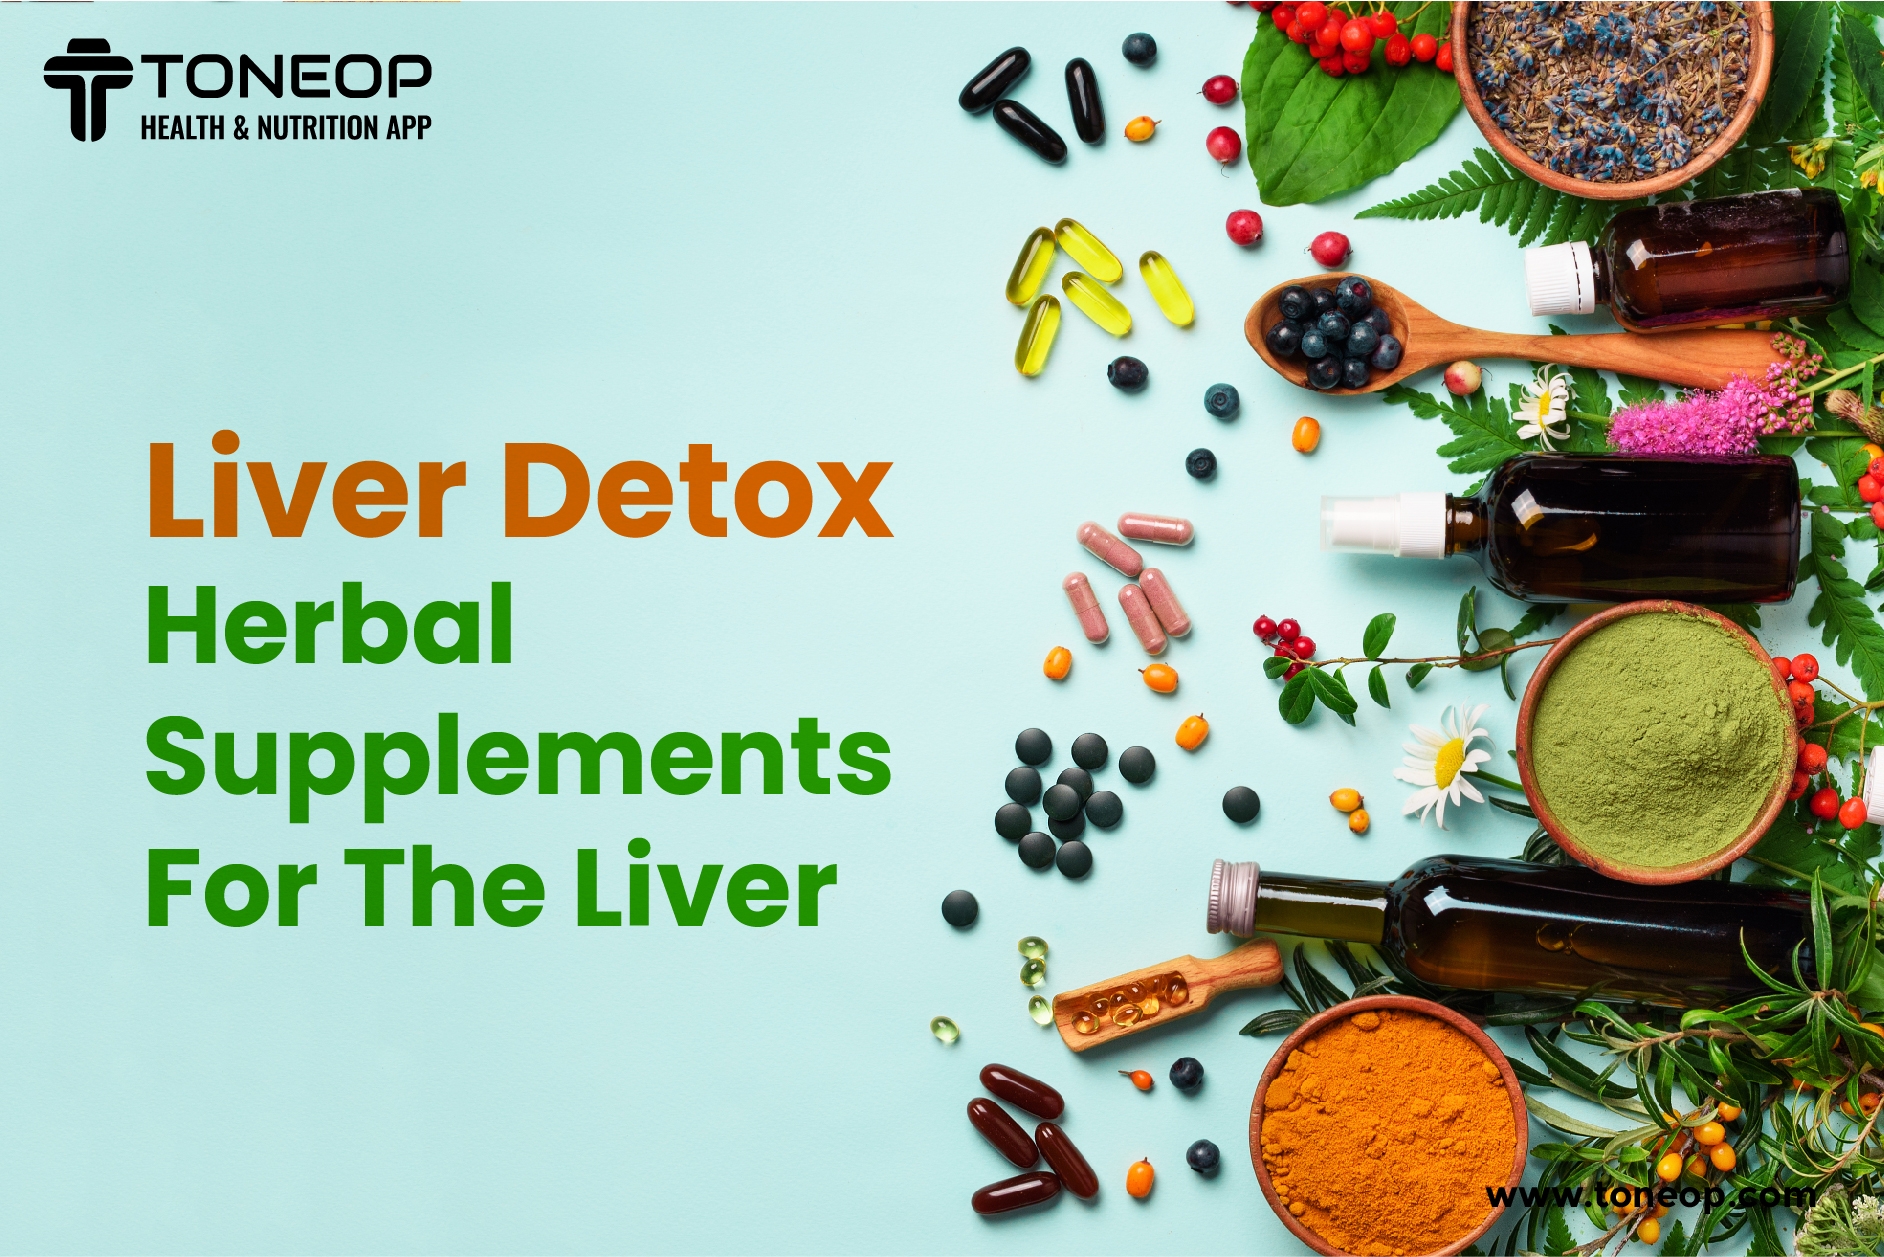 Liver Detox: Herbal Supplements For The Liver